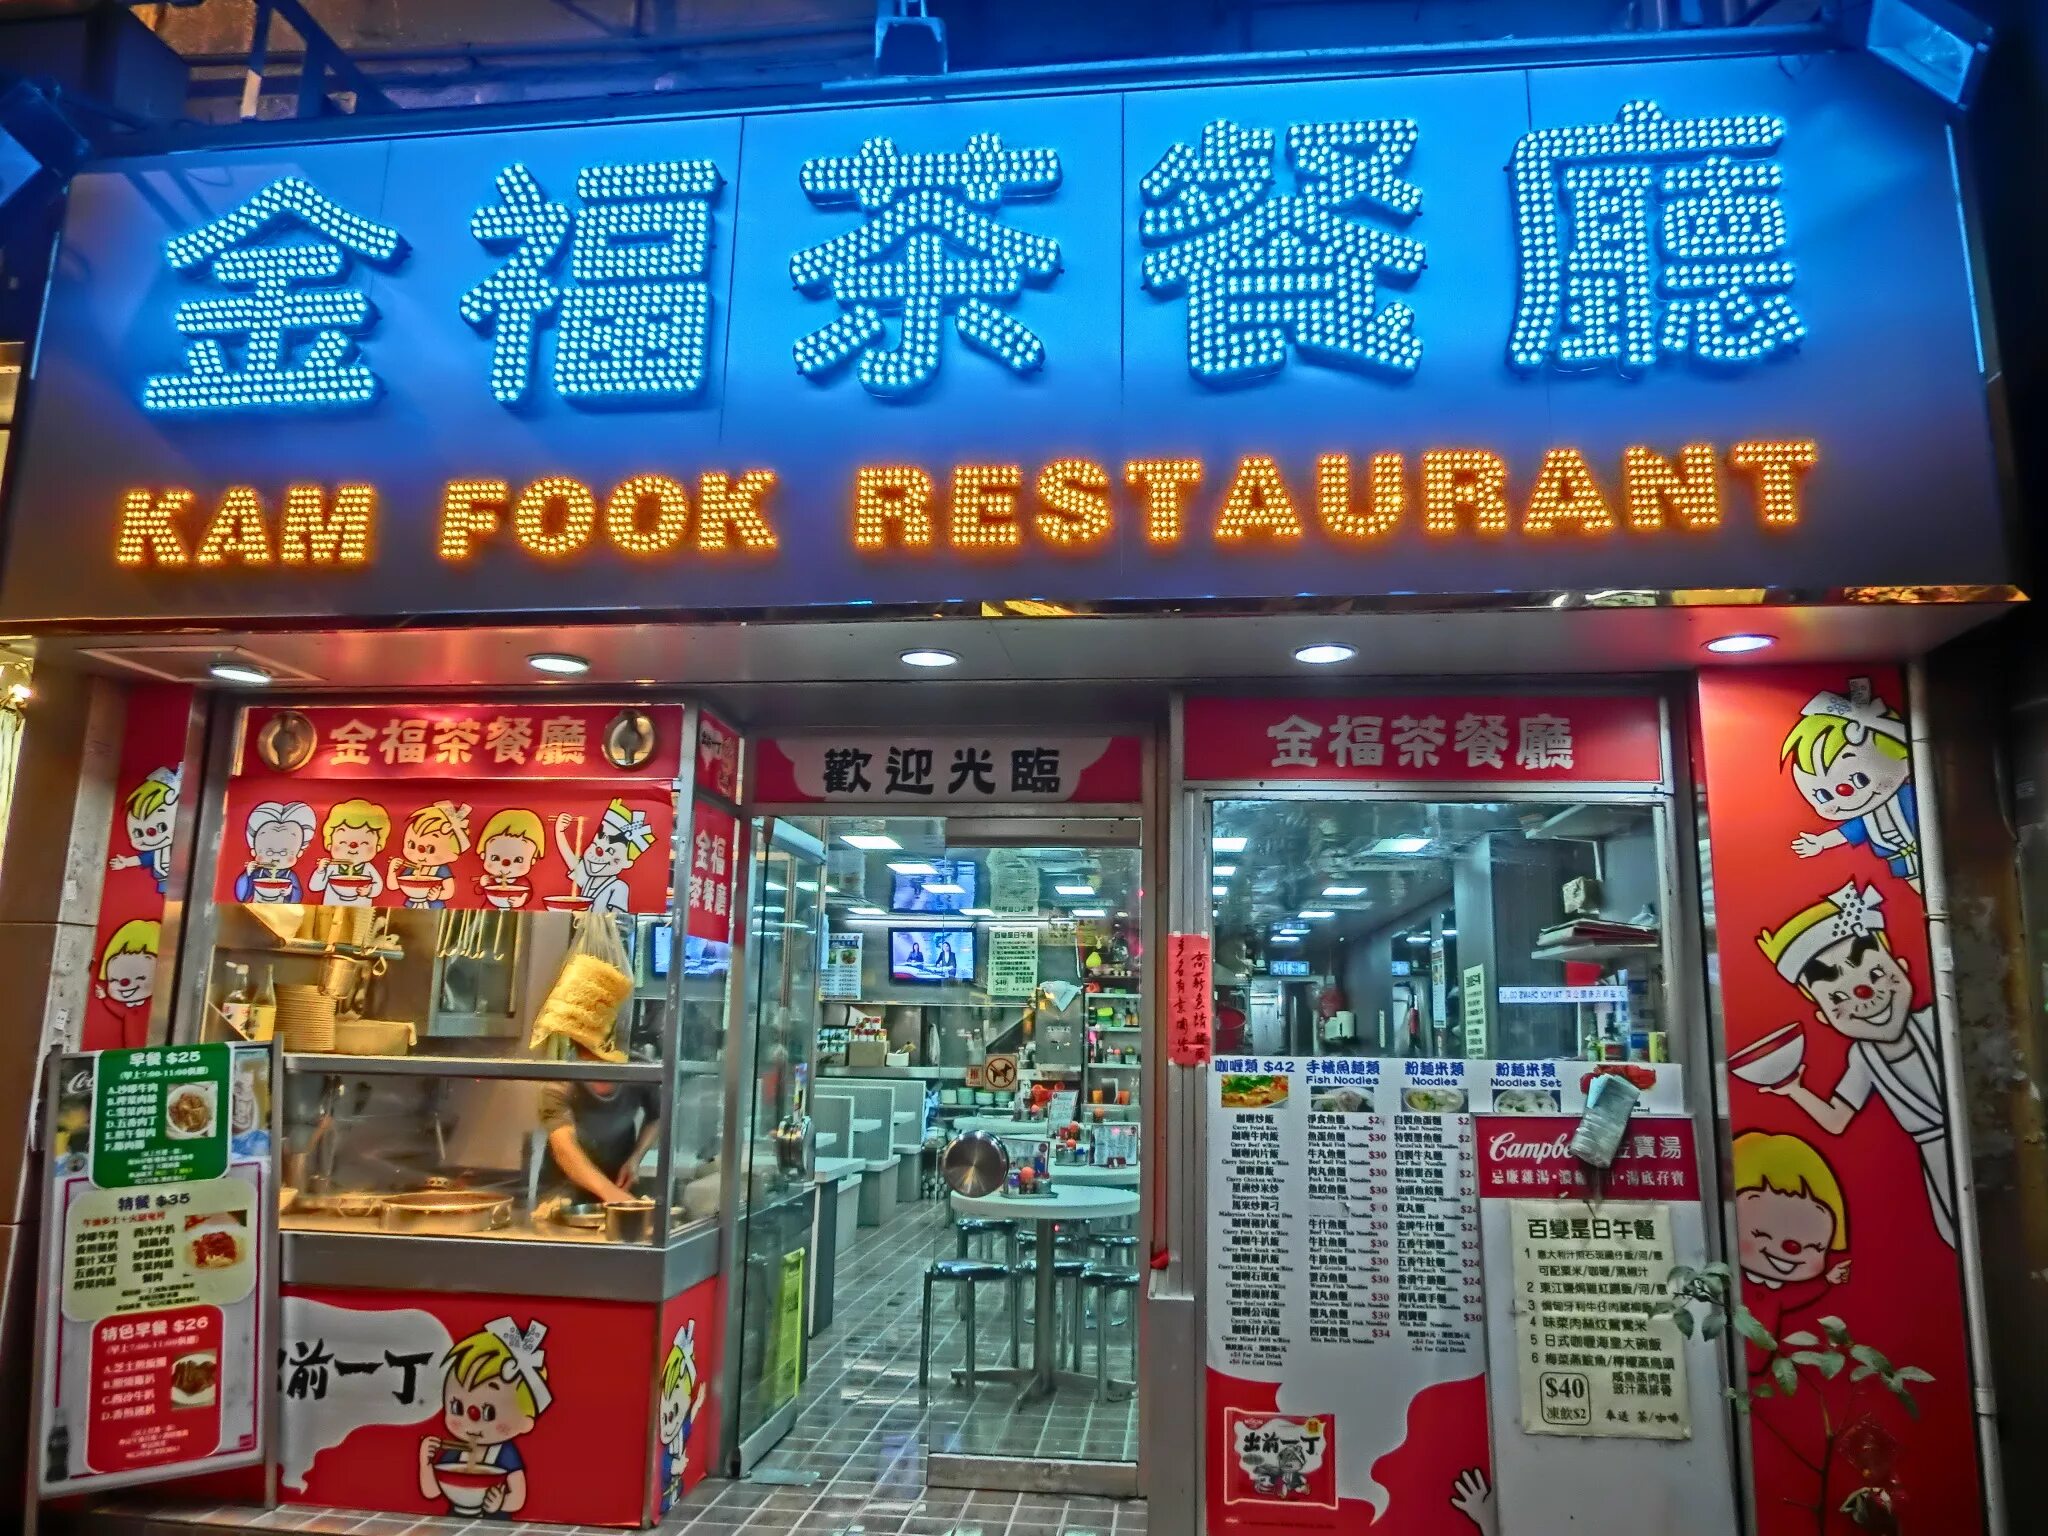 Shop sang. Wan how Chinese Restaurant. Fook you. Fish and Chip shops China.